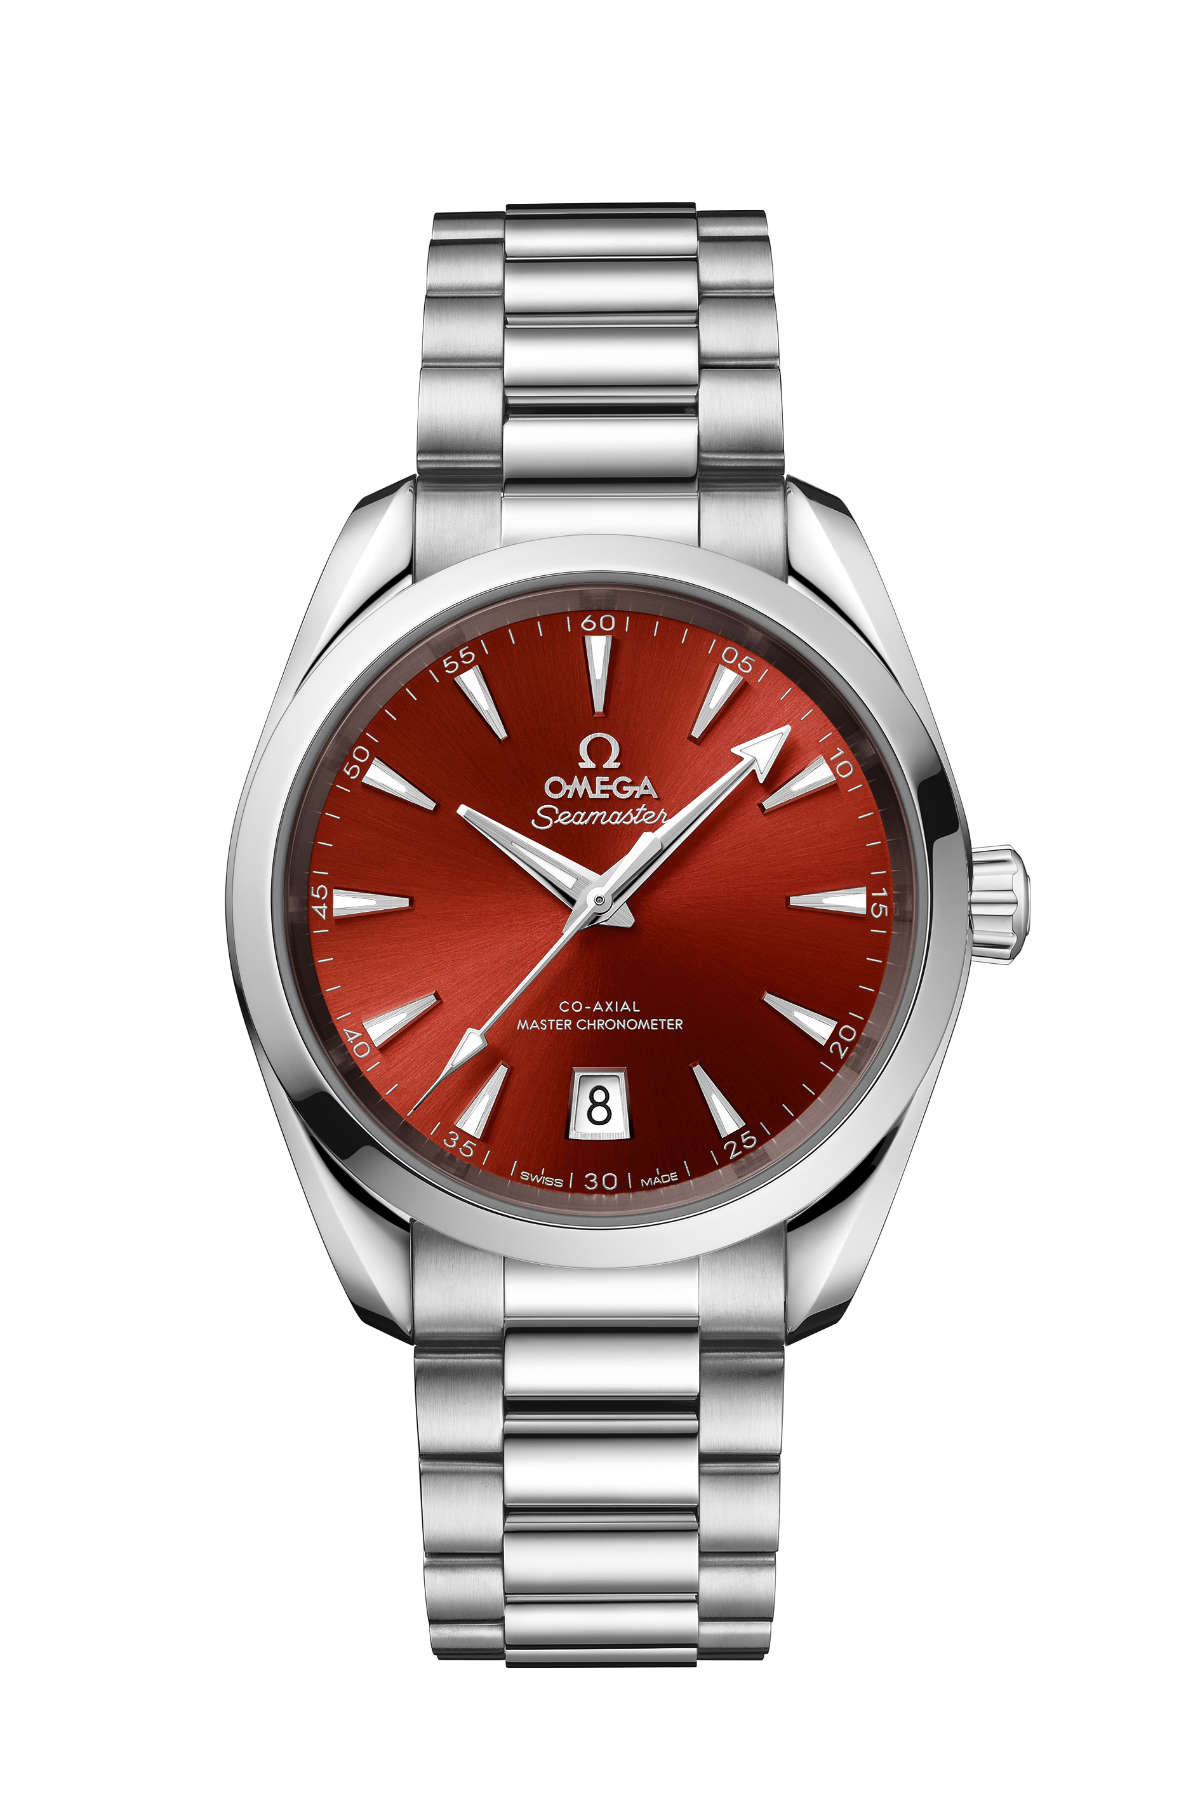 Omega Presents Its New Aqua Terra Shades Watch Collection